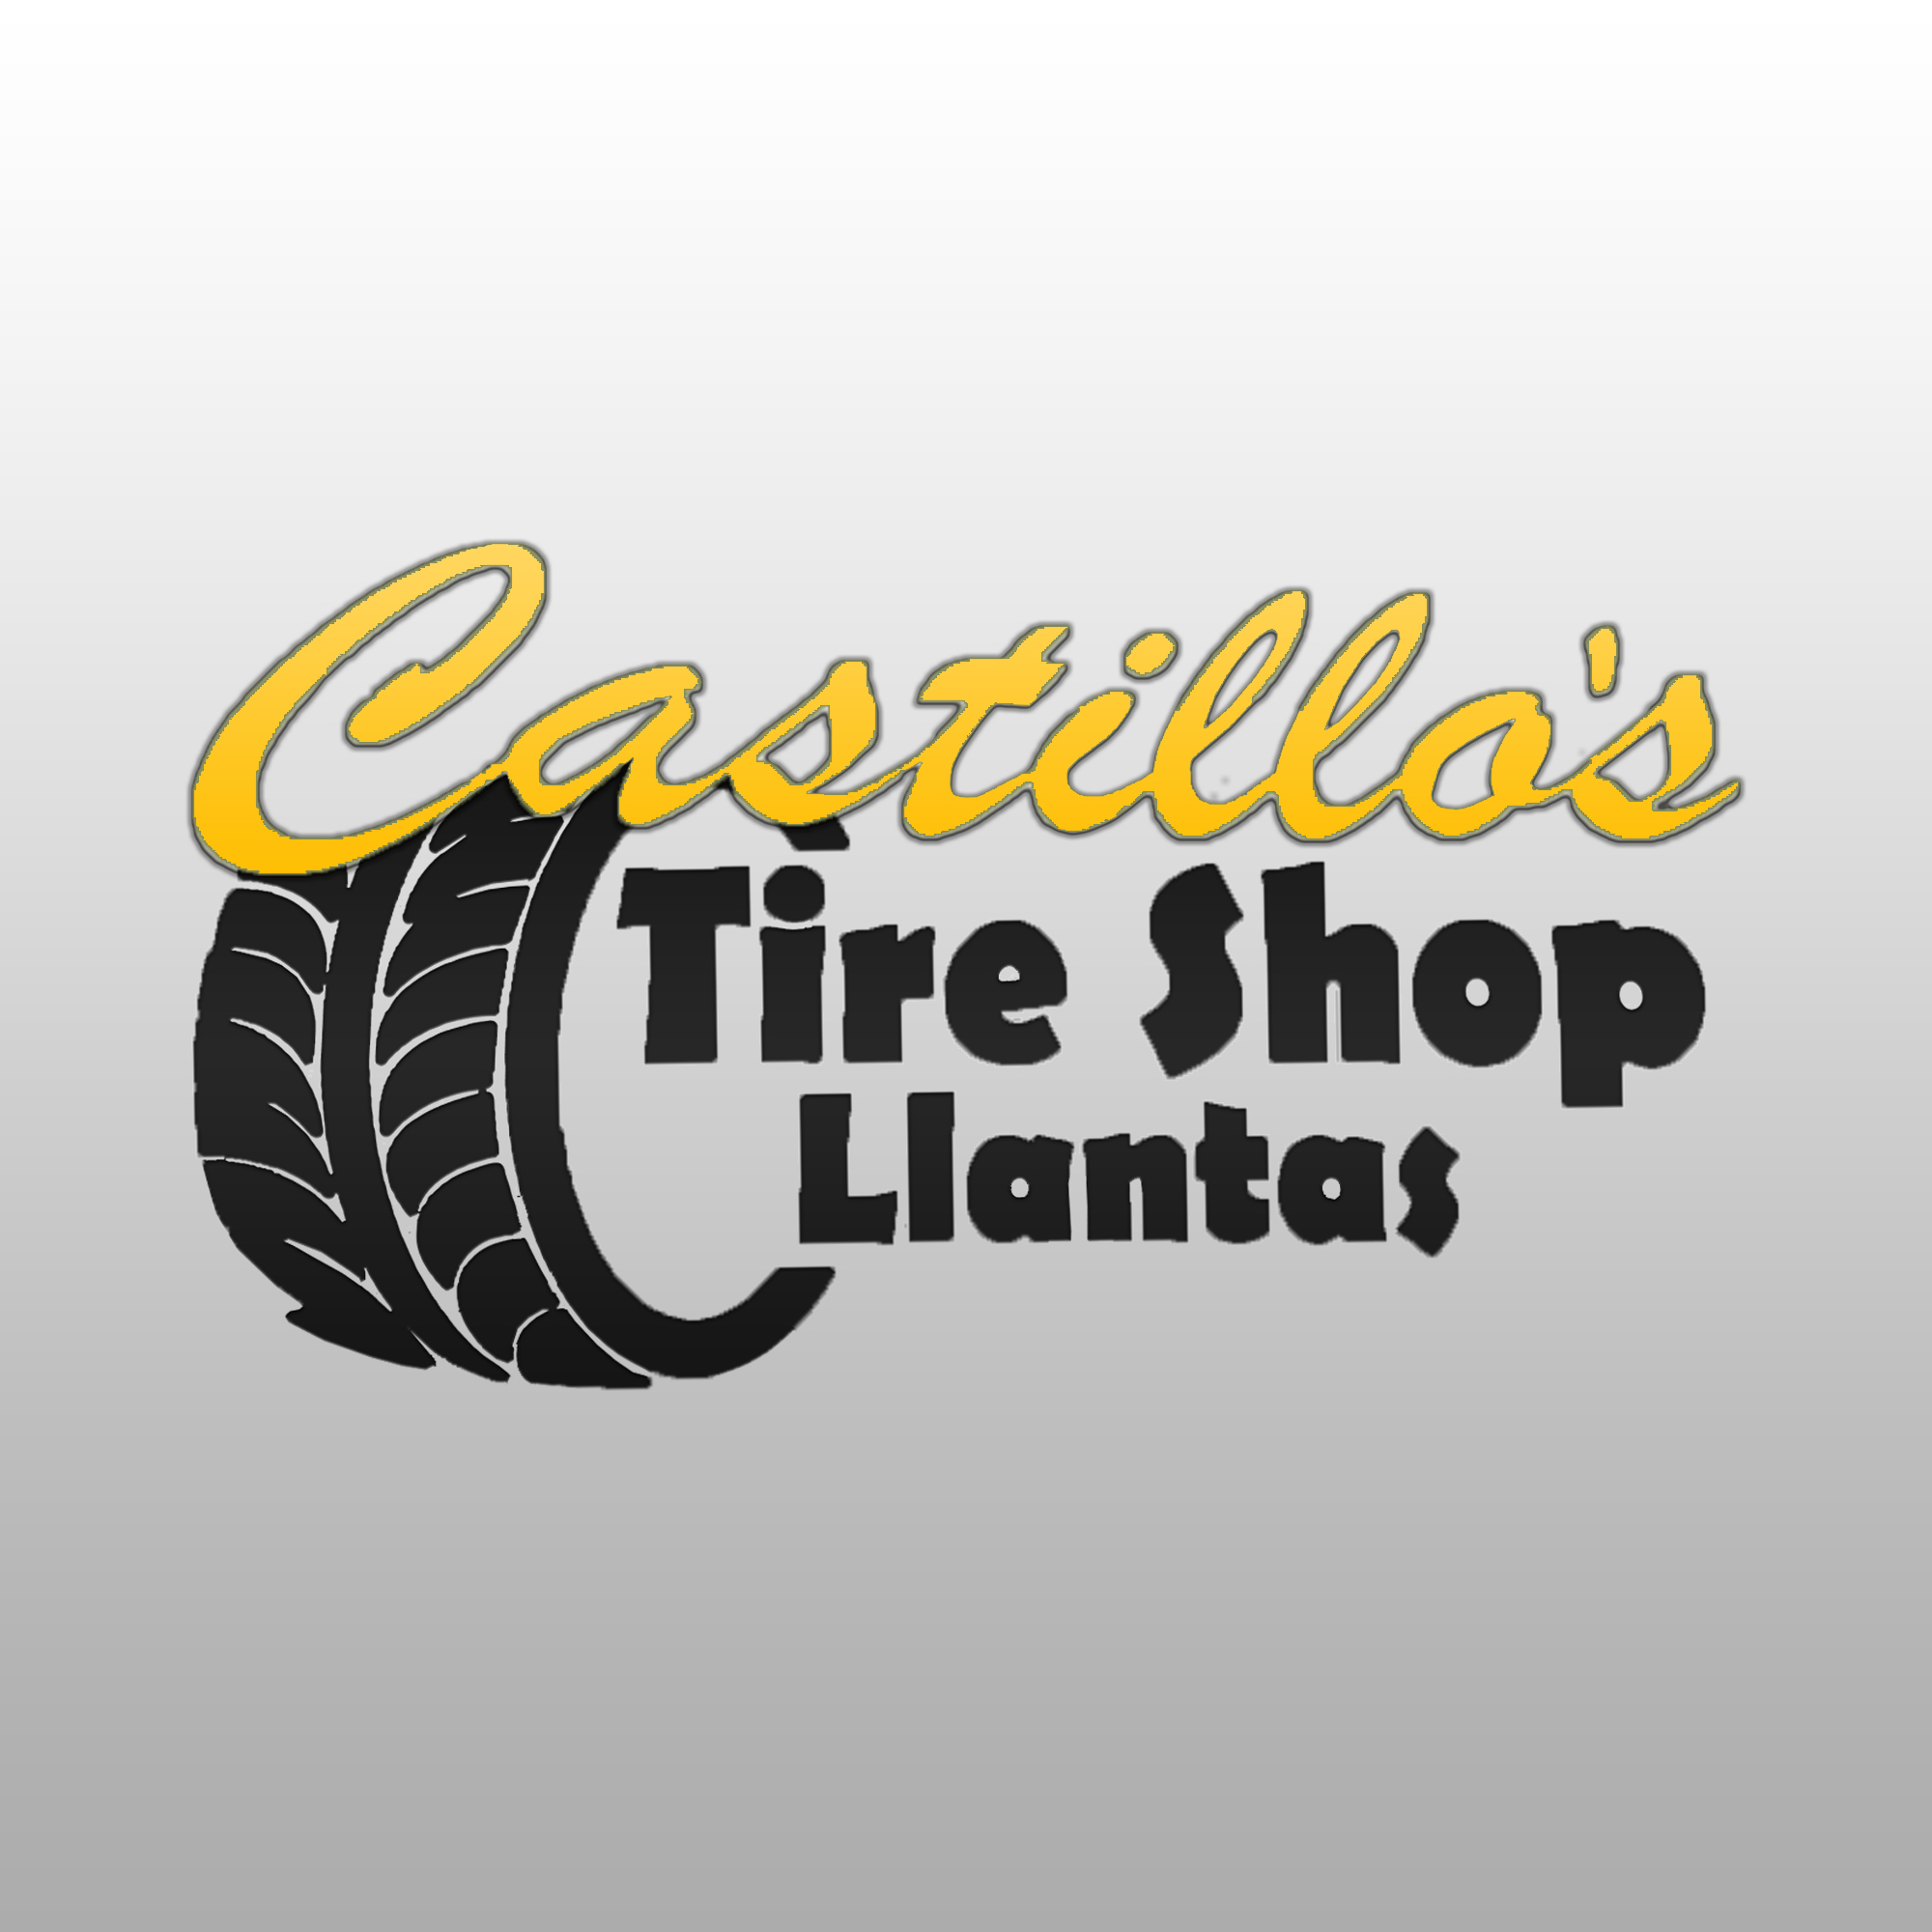 Castillo Tire Shop